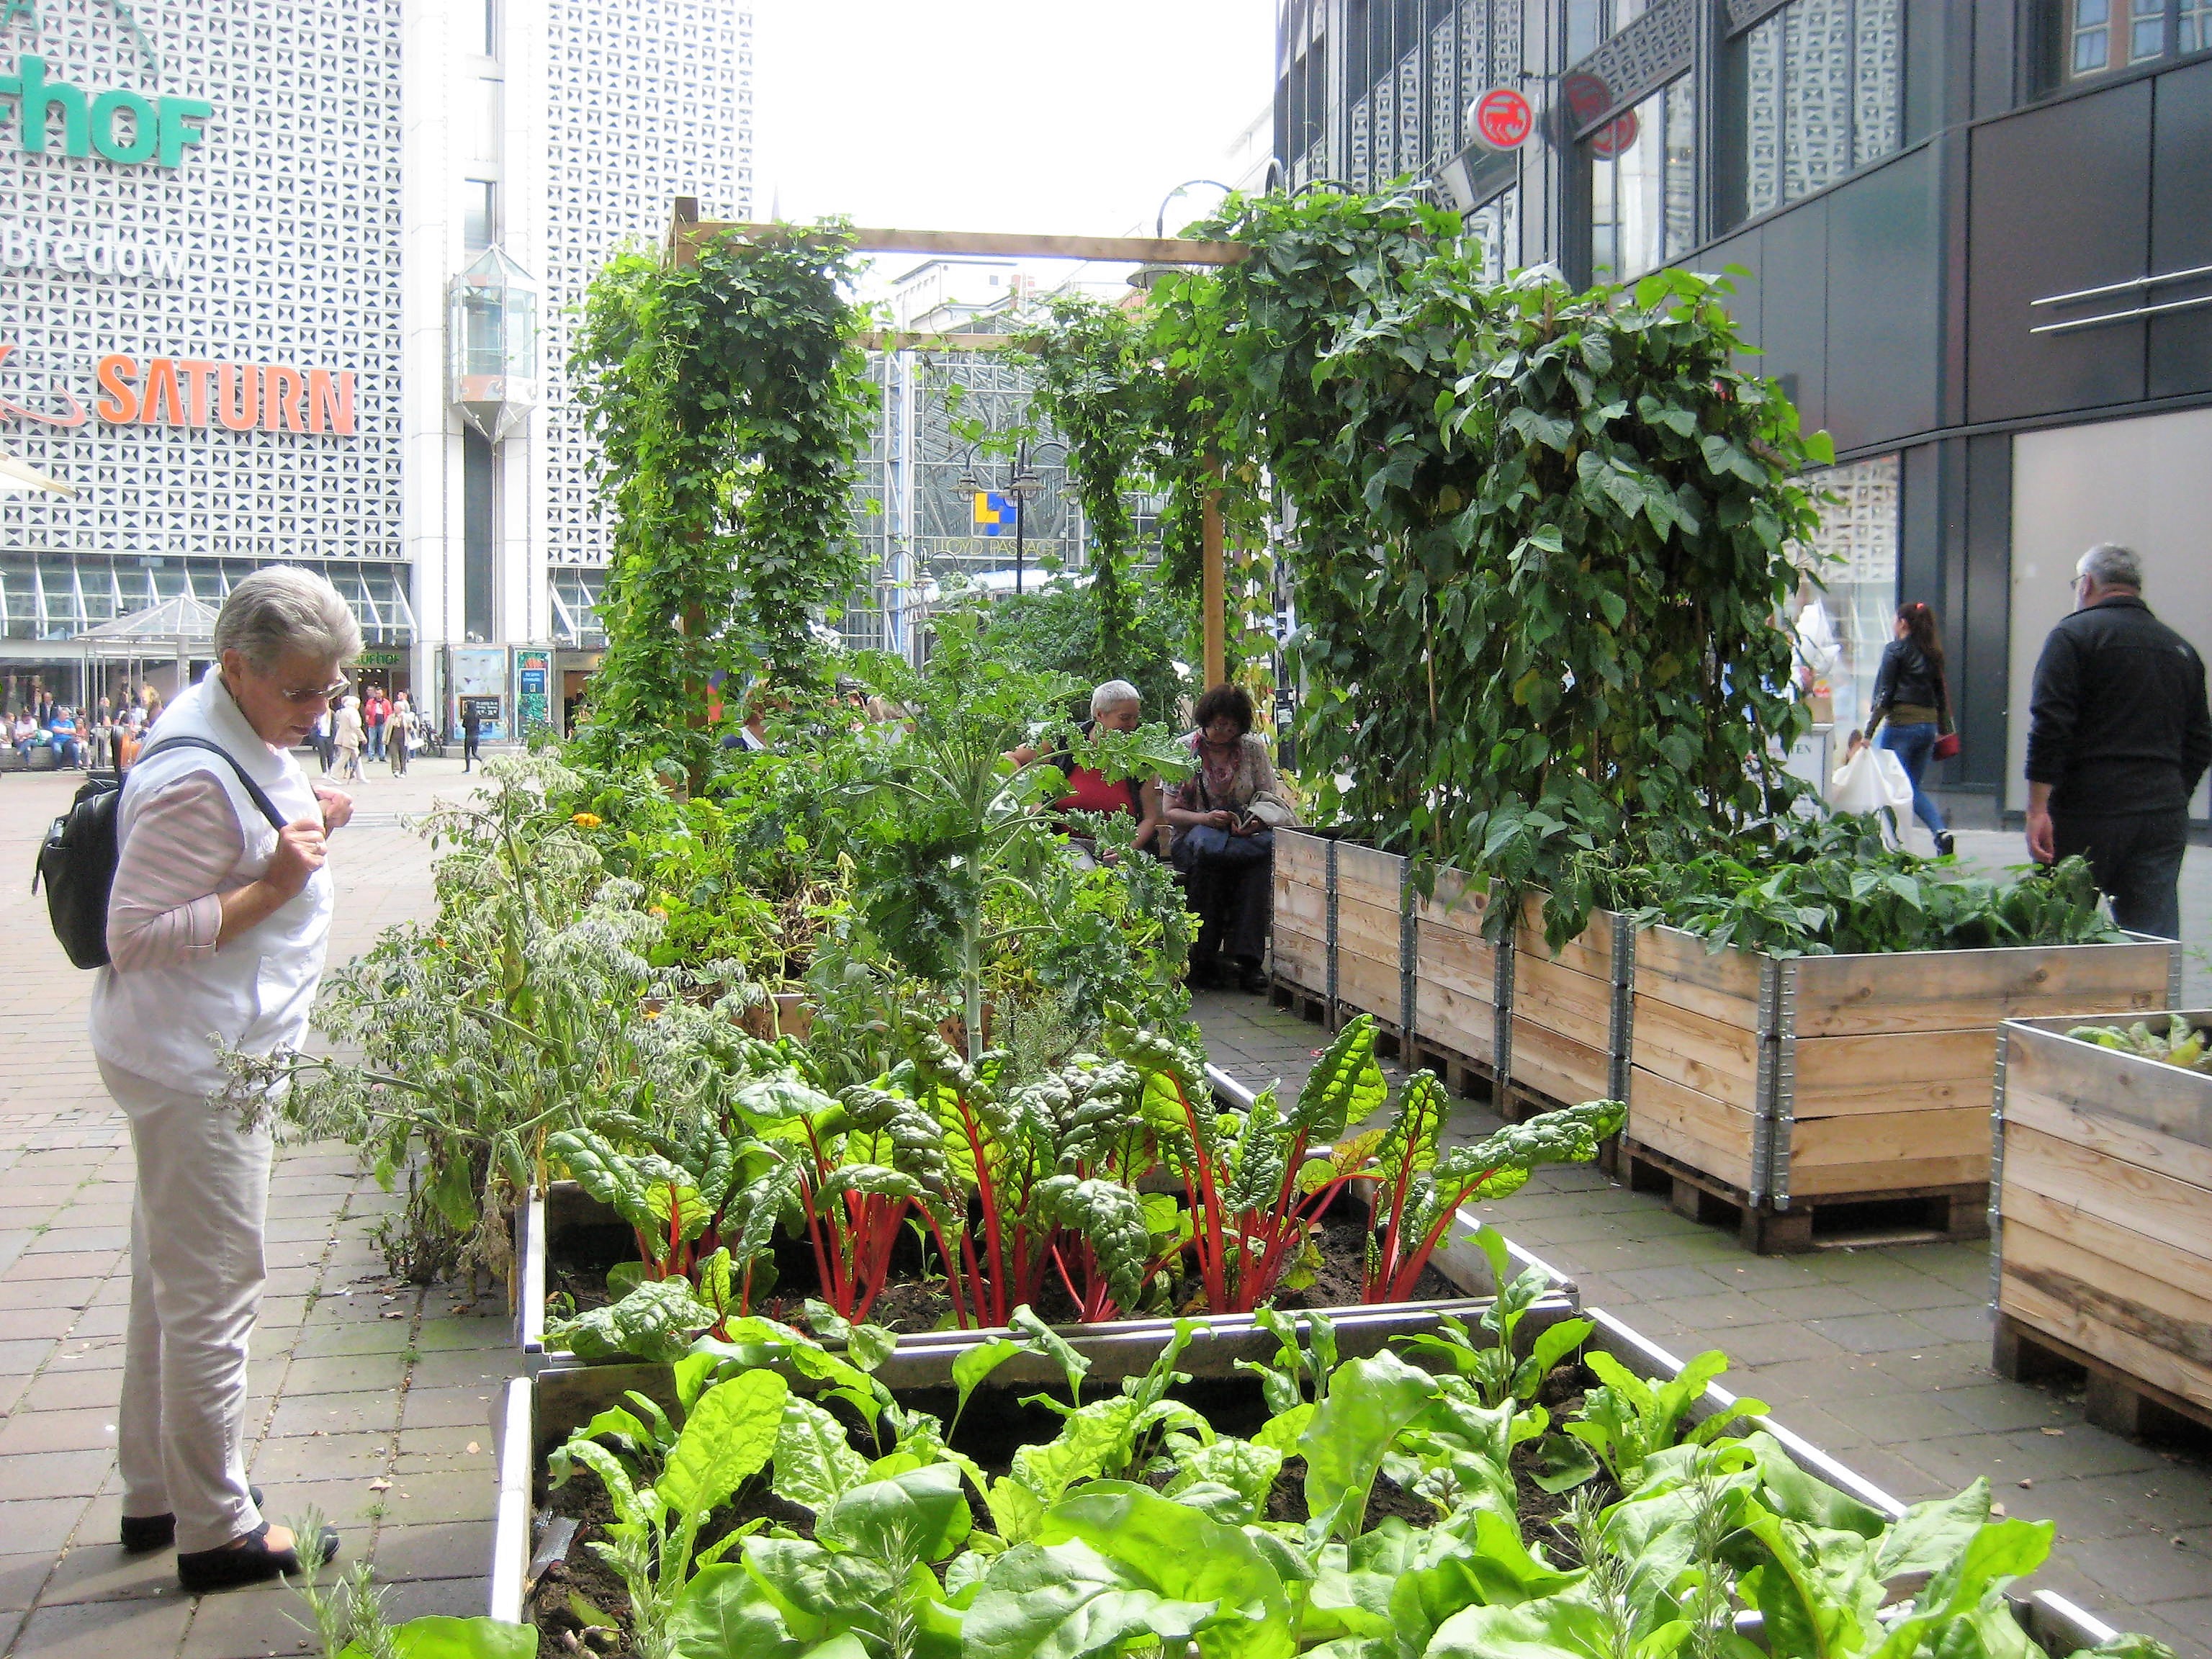 Harvesting Cities: An Urban Farming 101